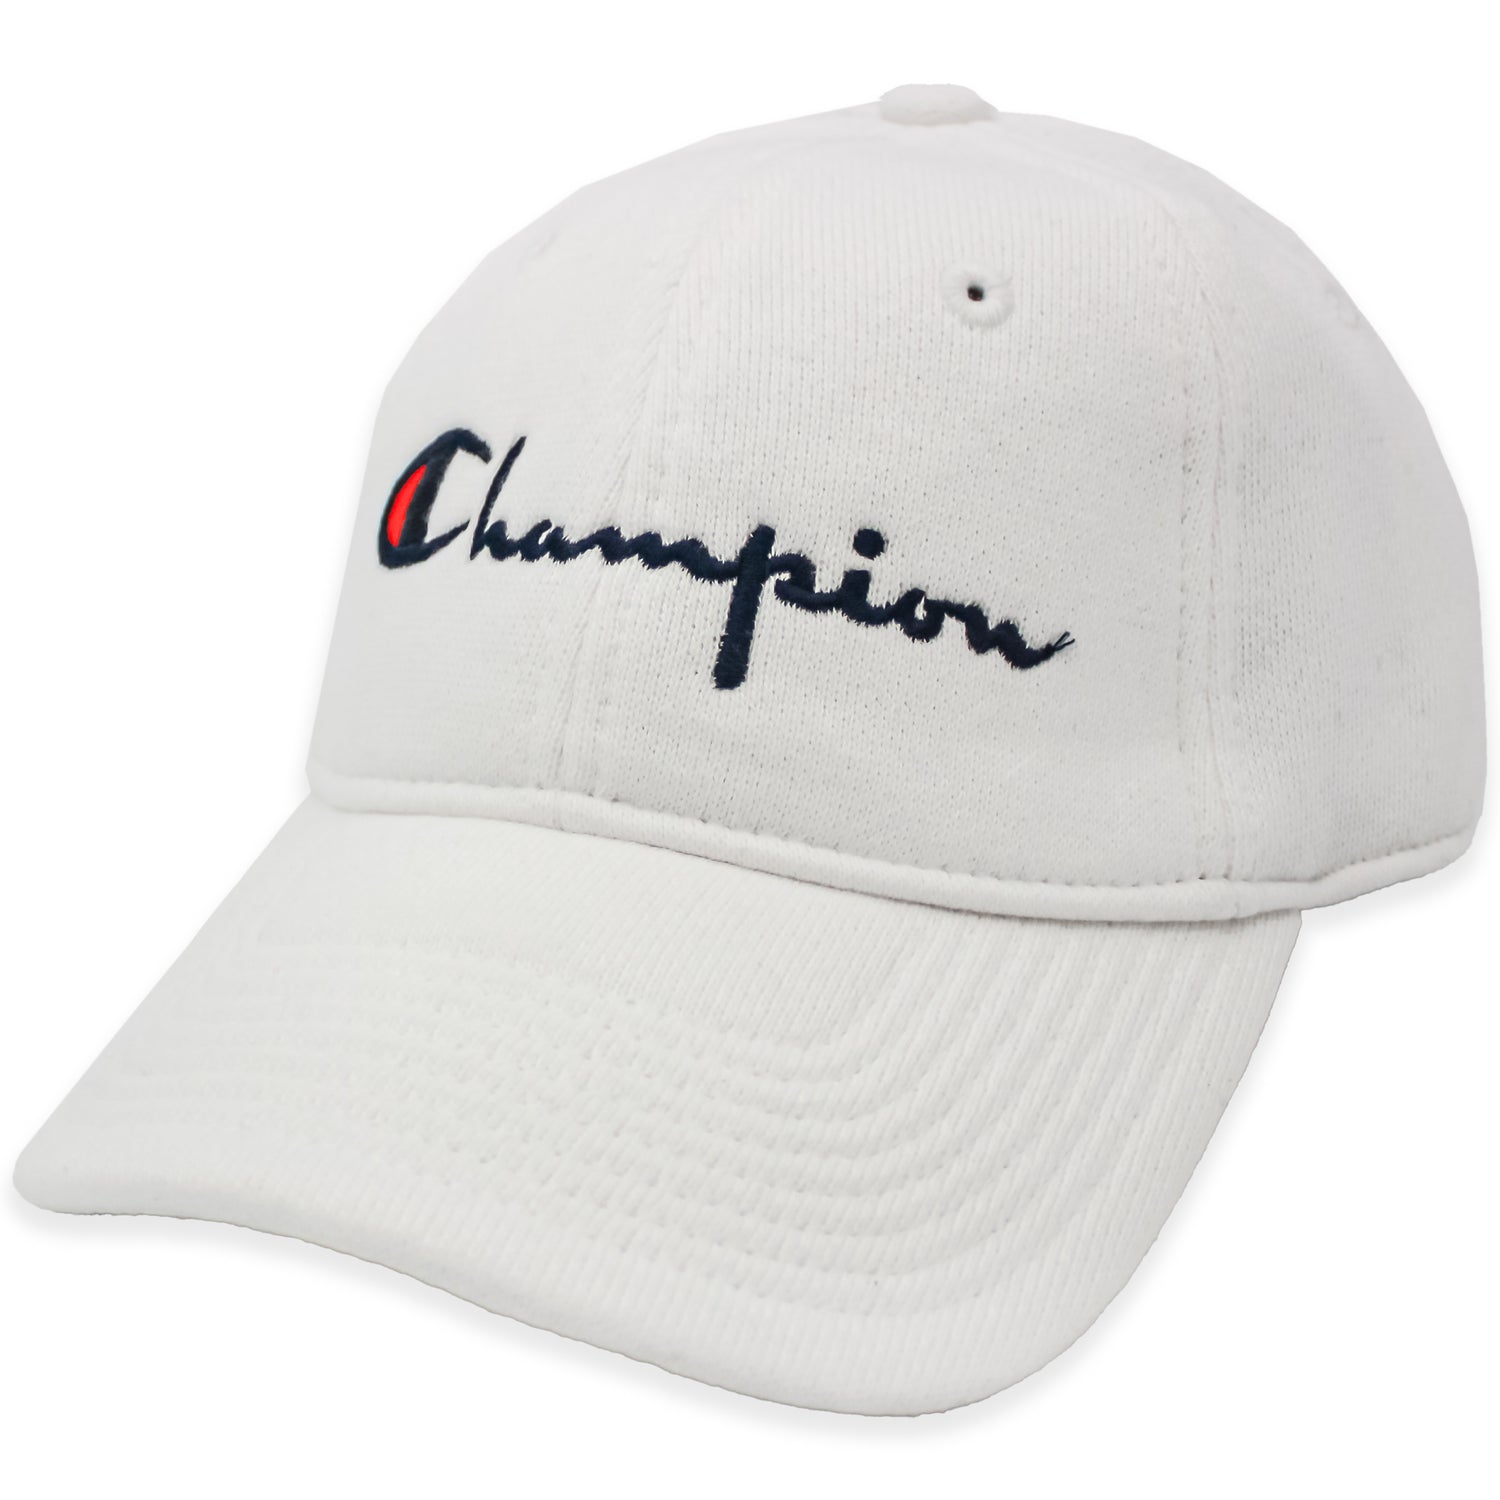 White Champion Cap